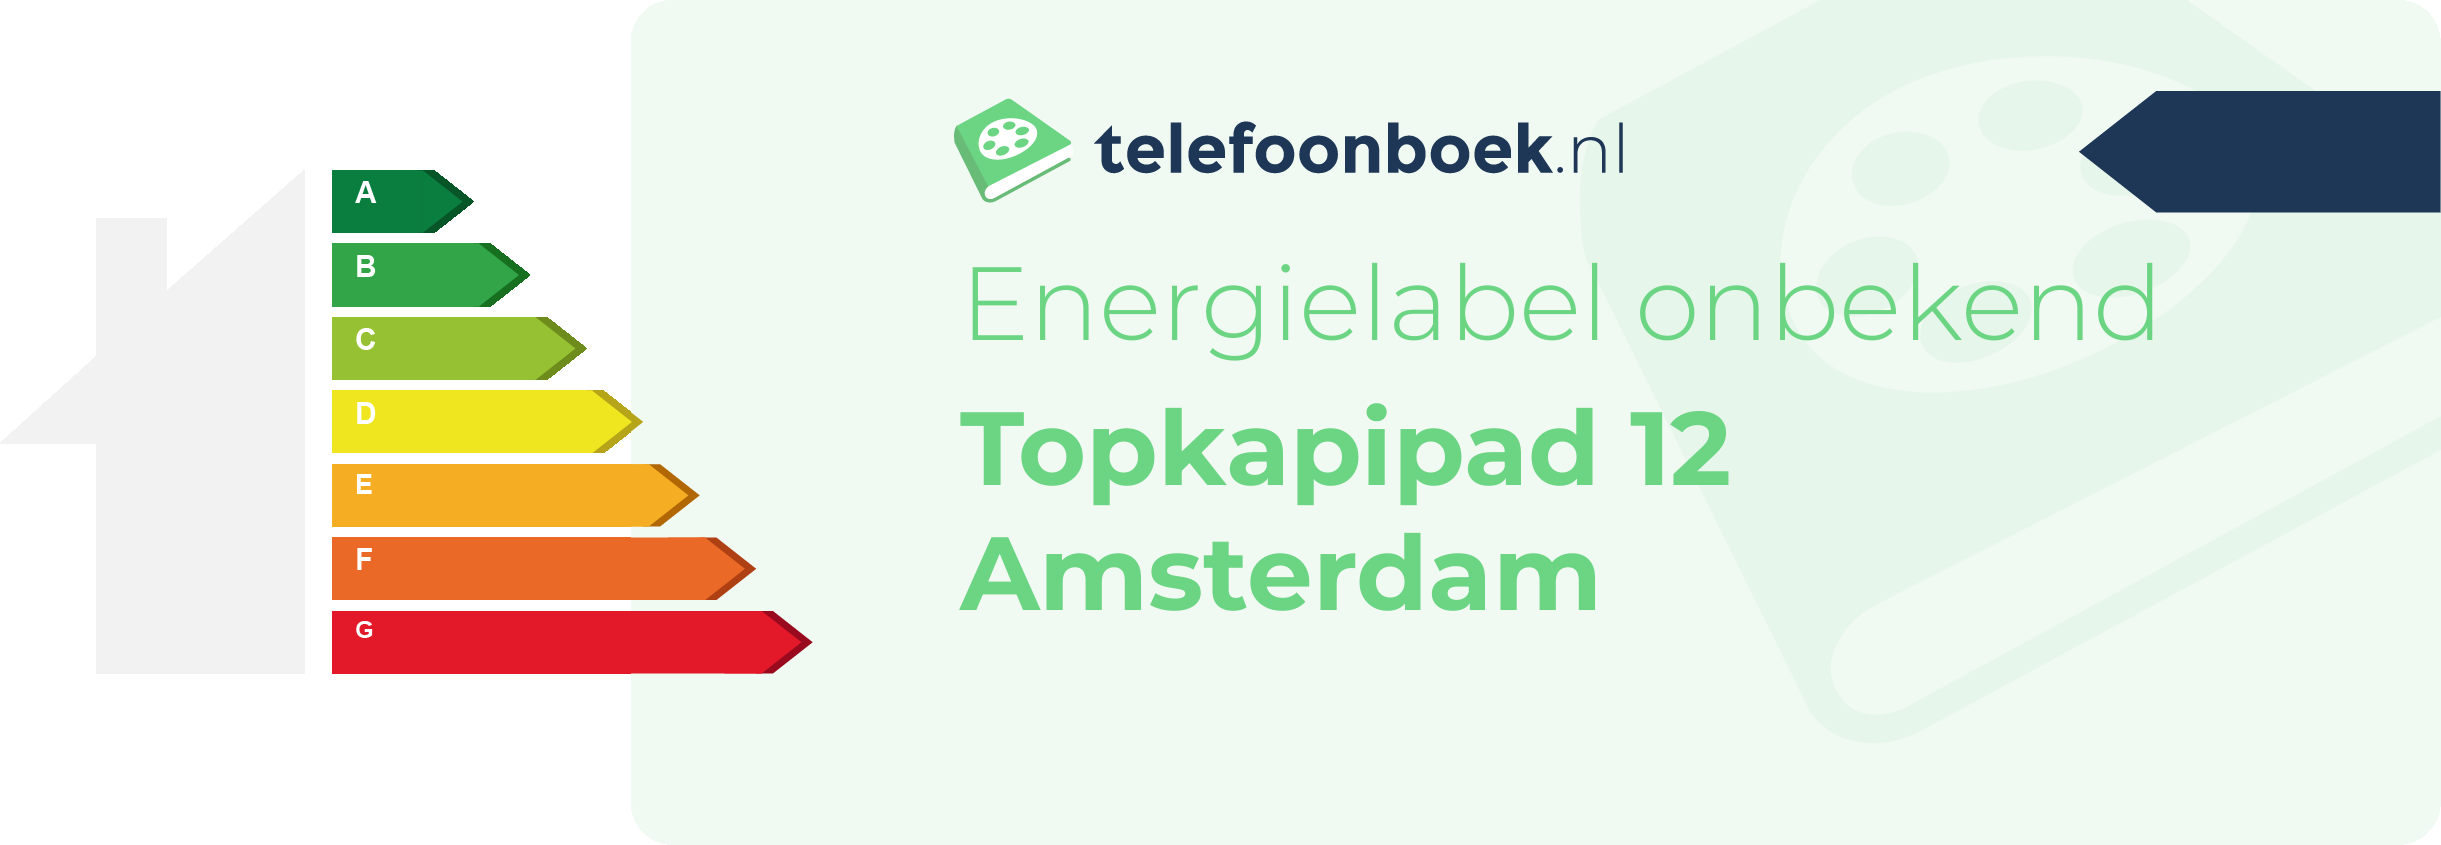 Energielabel Topkapipad 12 Amsterdam